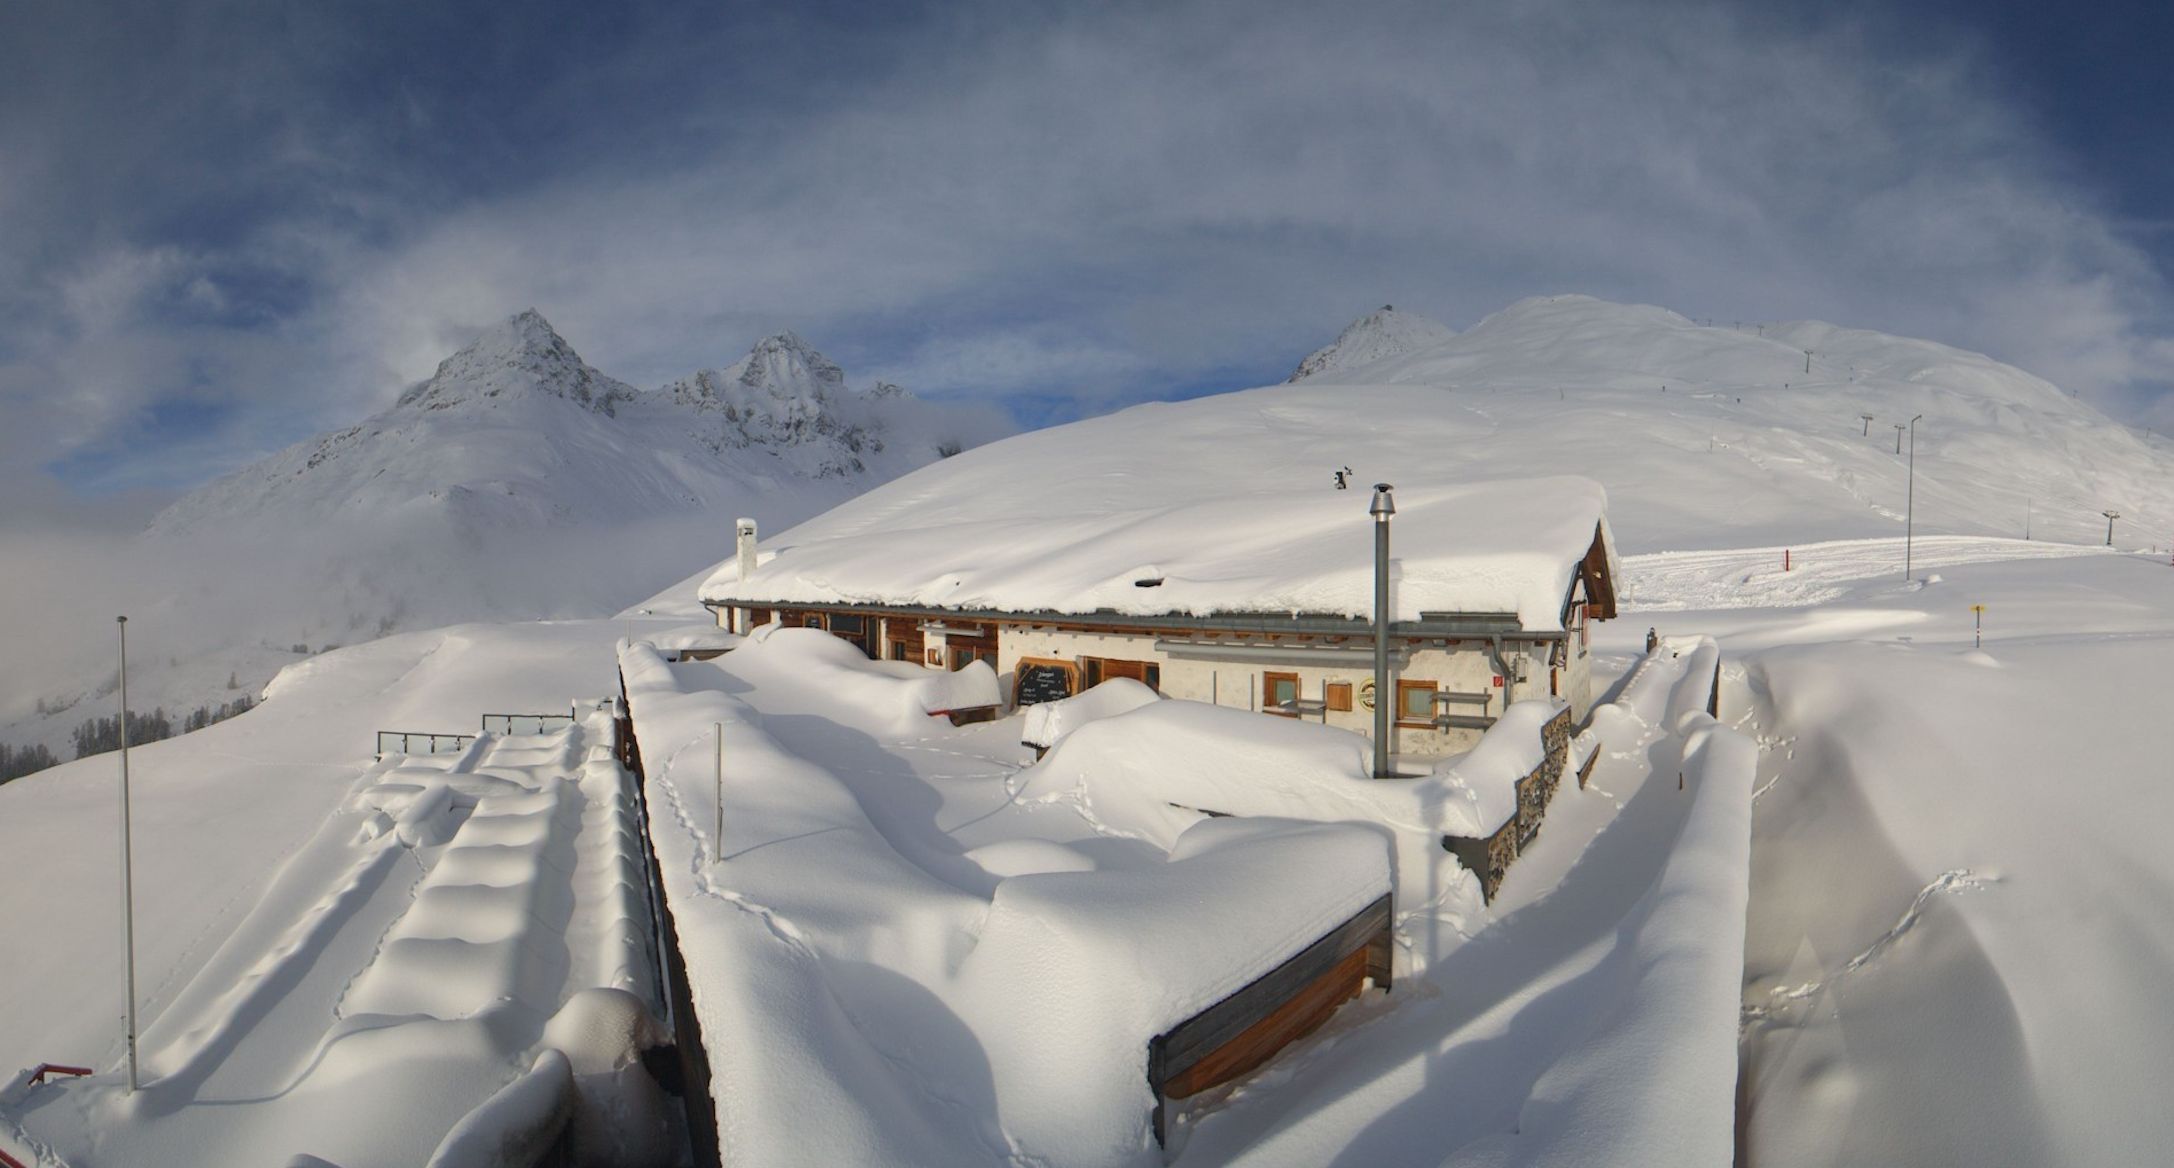 St. Moritz this morning